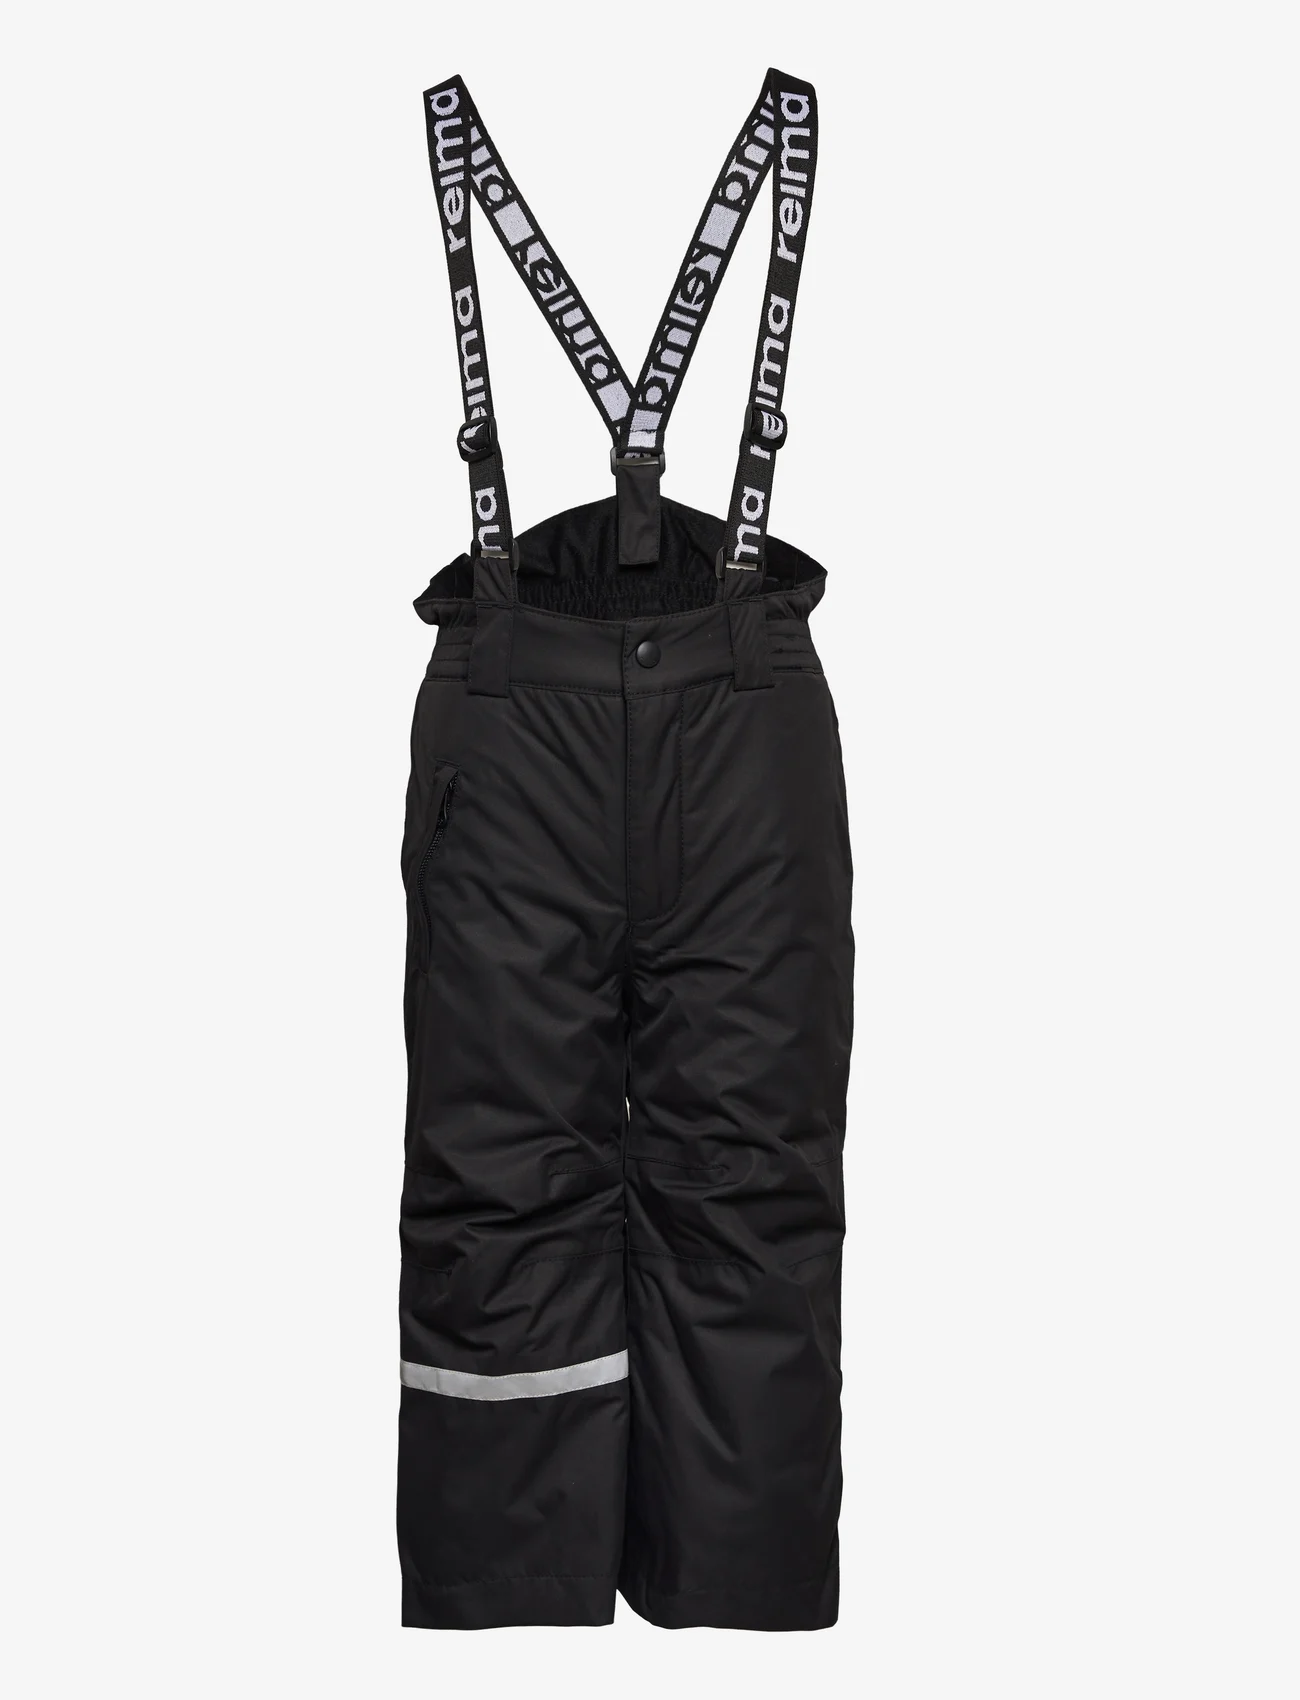 Reima - Winter pants, Tuokio - outdoorhosen - black - 0